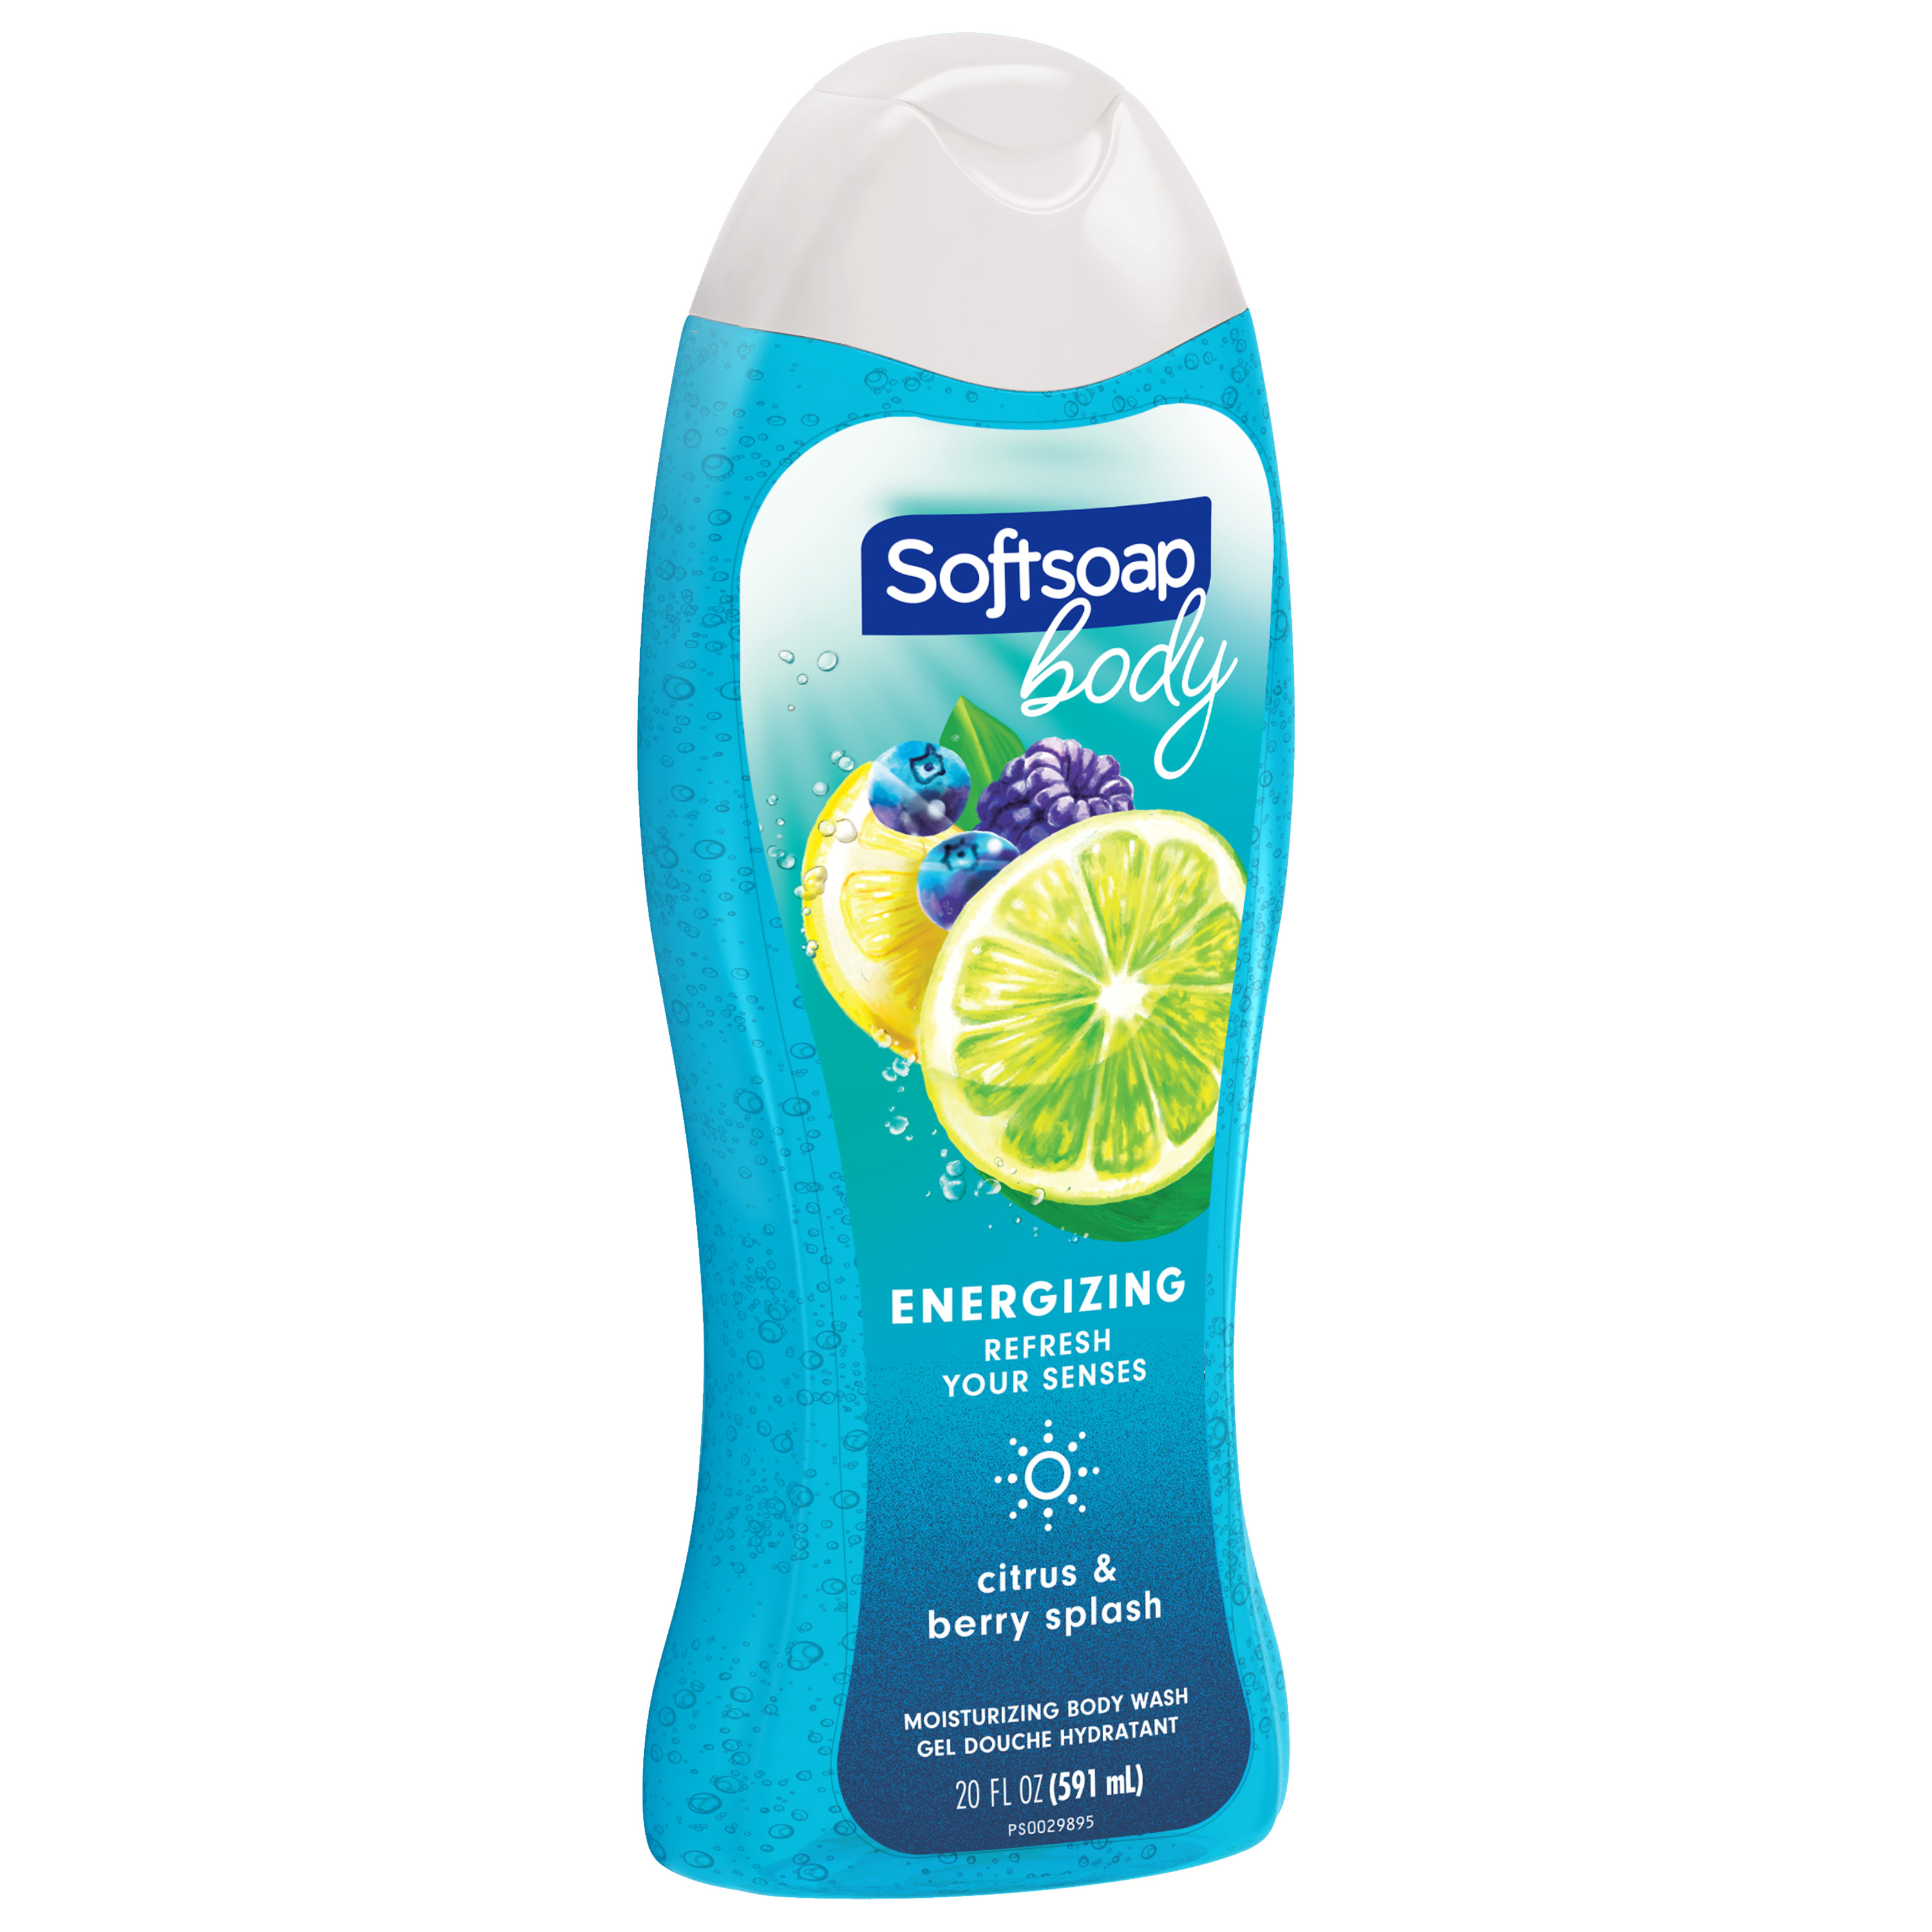 Softsoap Body Citrus Scent & Berry Splash Body Wash, 20 Oz - image 14 of 16